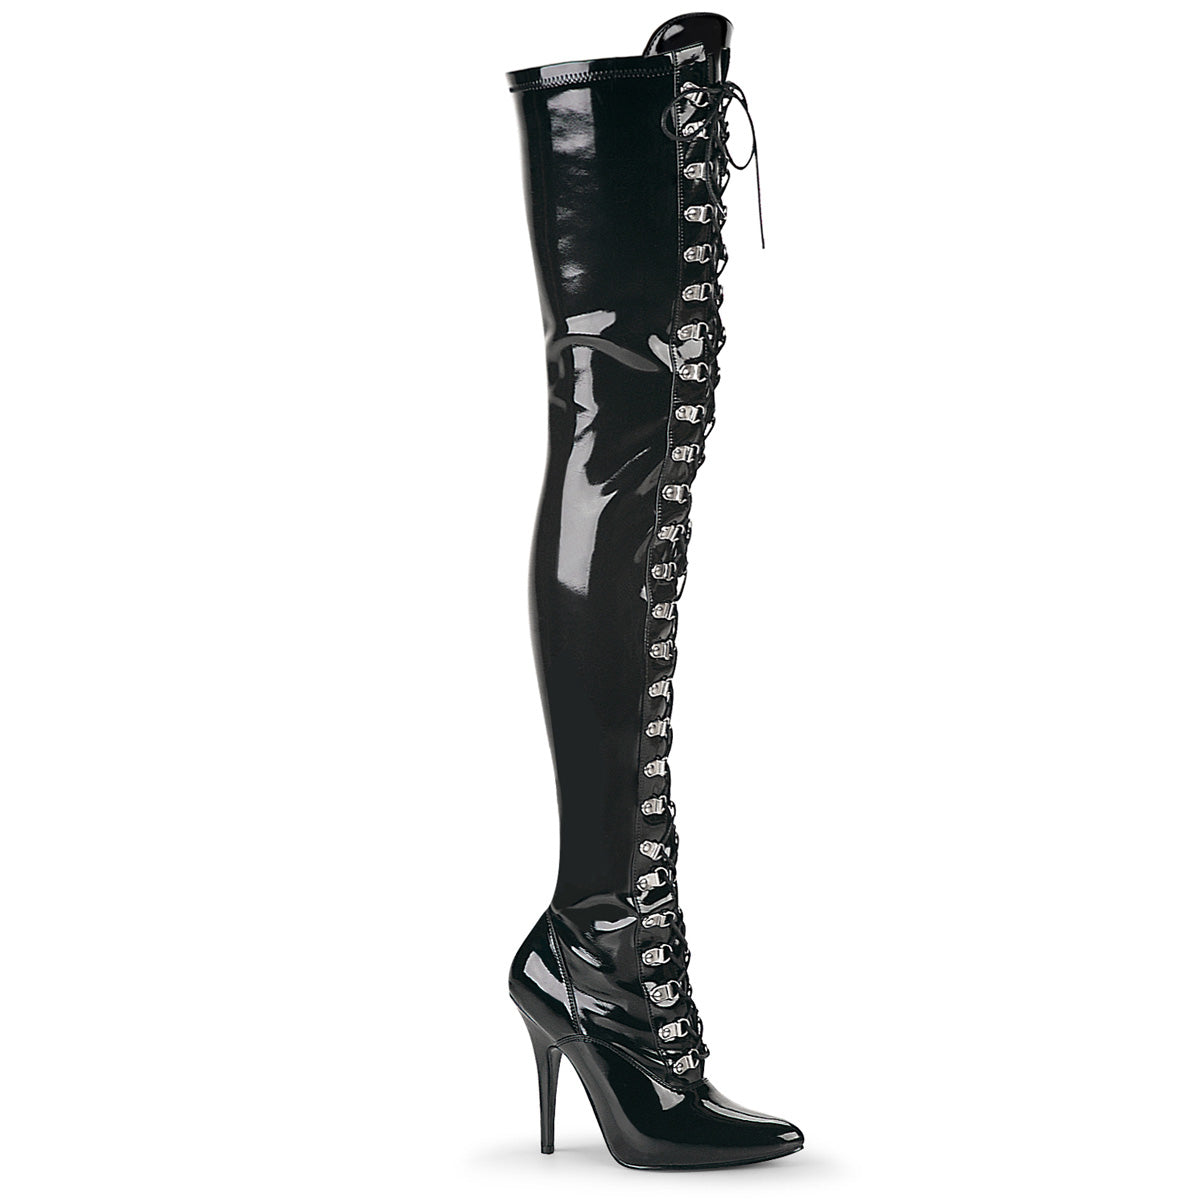 SEDUCE-3024 Thigh Boots 5" Heel Black Patent Fetish Thigh High Boots